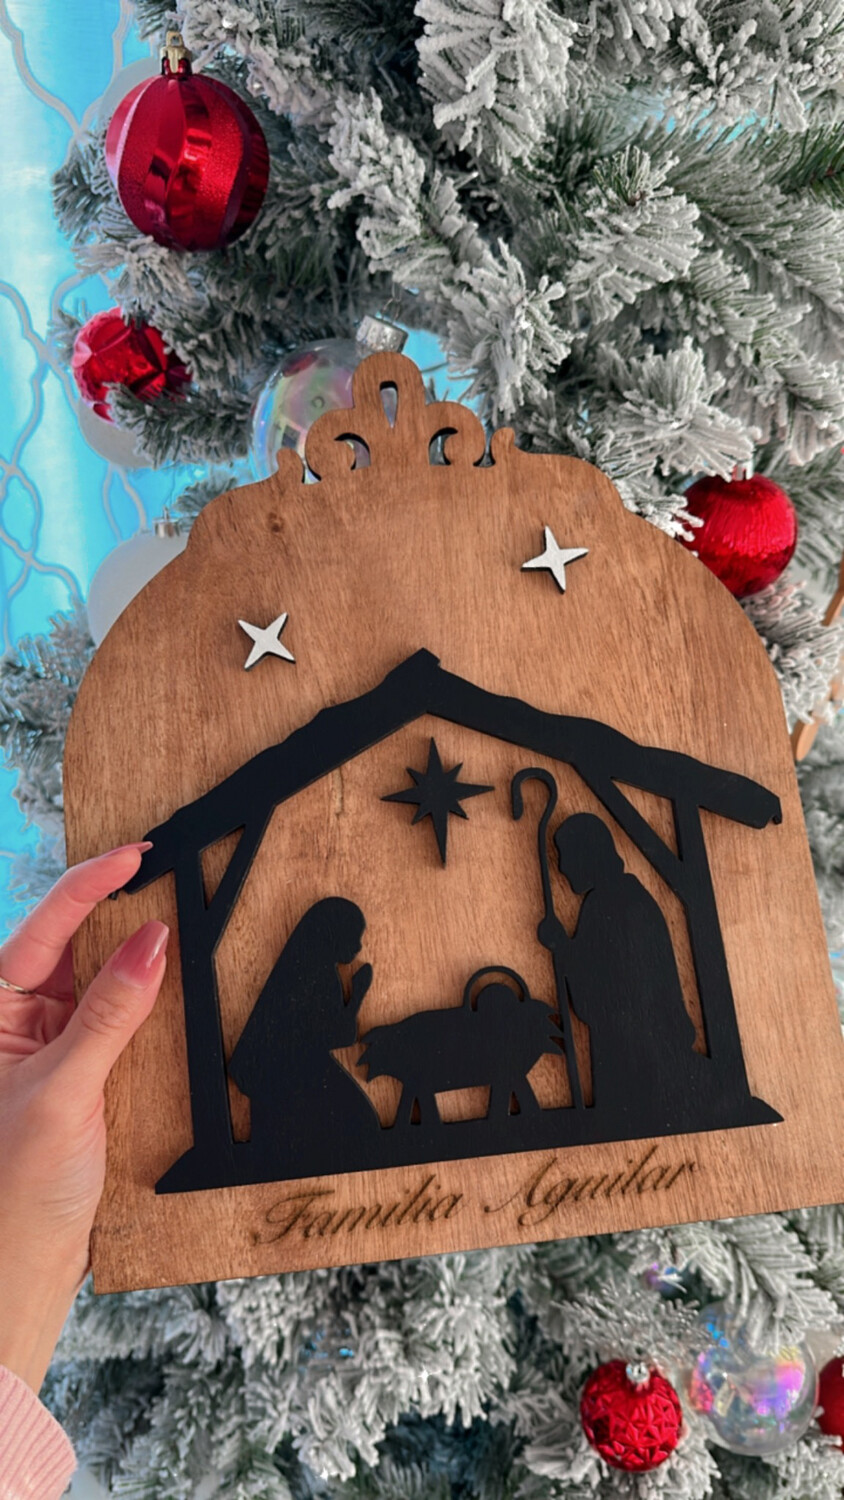 13 Inch Arched Nativity Scene, 3D Wood Frame Baby Jesus Scene, Home Decor, Christmas Decor